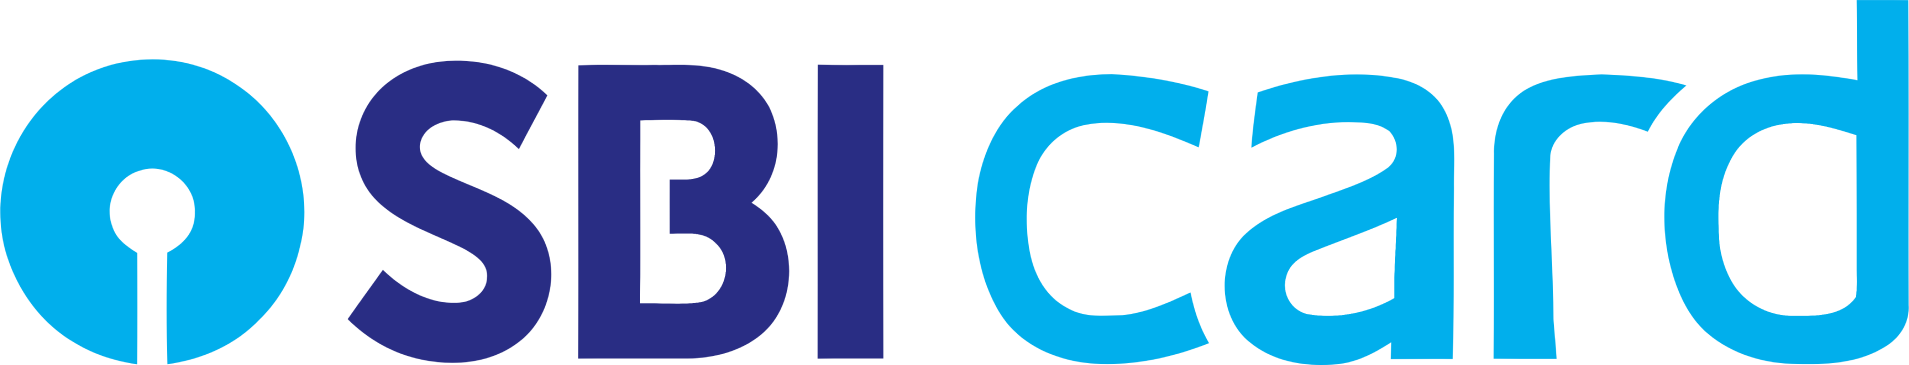 SBI Card logo large (transparent PNG)